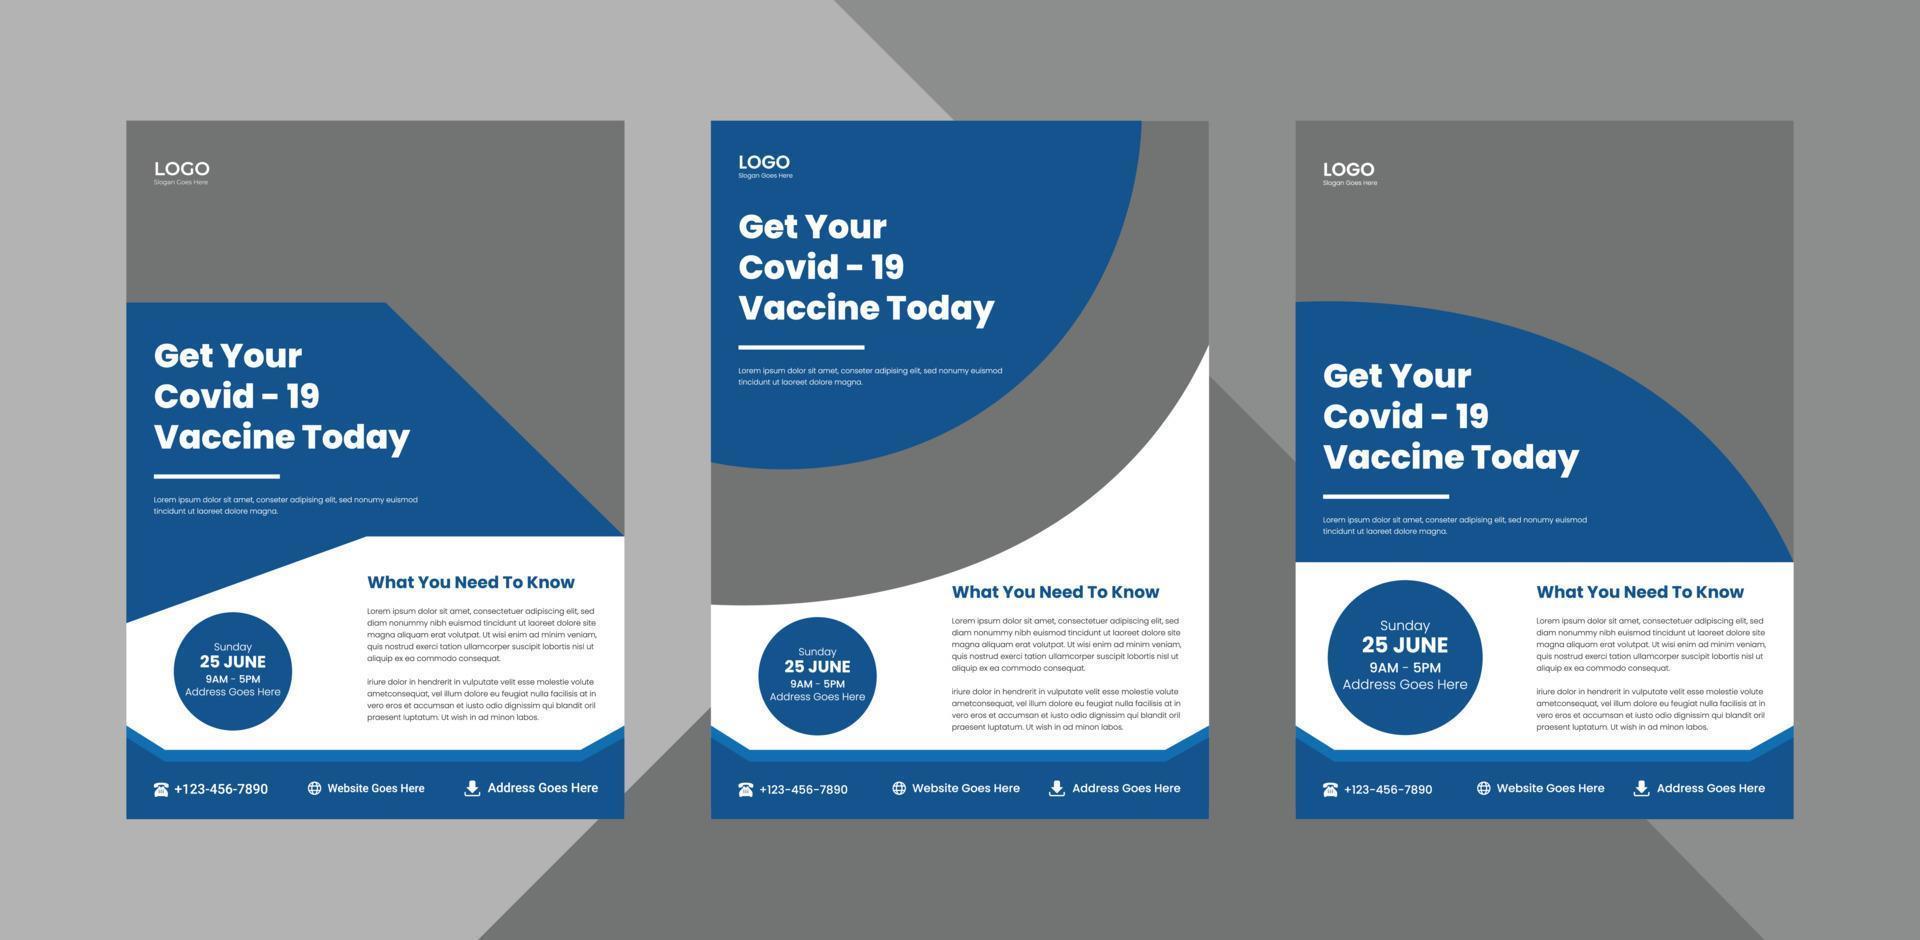 covid-19 vaccination program flyer design template bundle. coronavirus vaccination poster leaflet 3 in 1 design. bundle, 3 in 1, a4 template, brochure design, cover, flyer, poster, print-ready vector